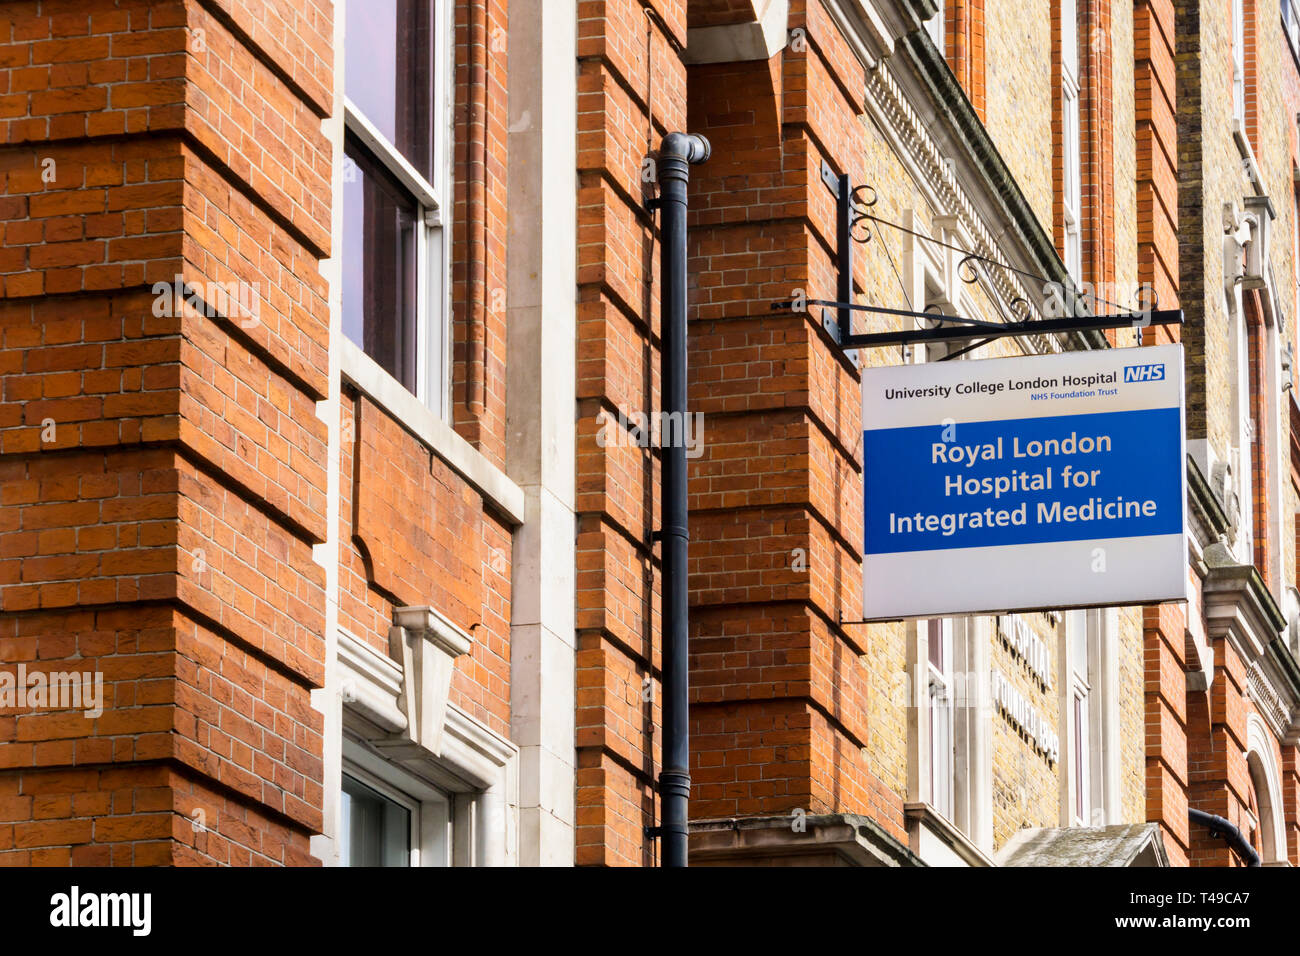 Das Royal London Hospital für Integrierte Medizin war früher die Royal London Homeopathic Hospital. Stockfoto